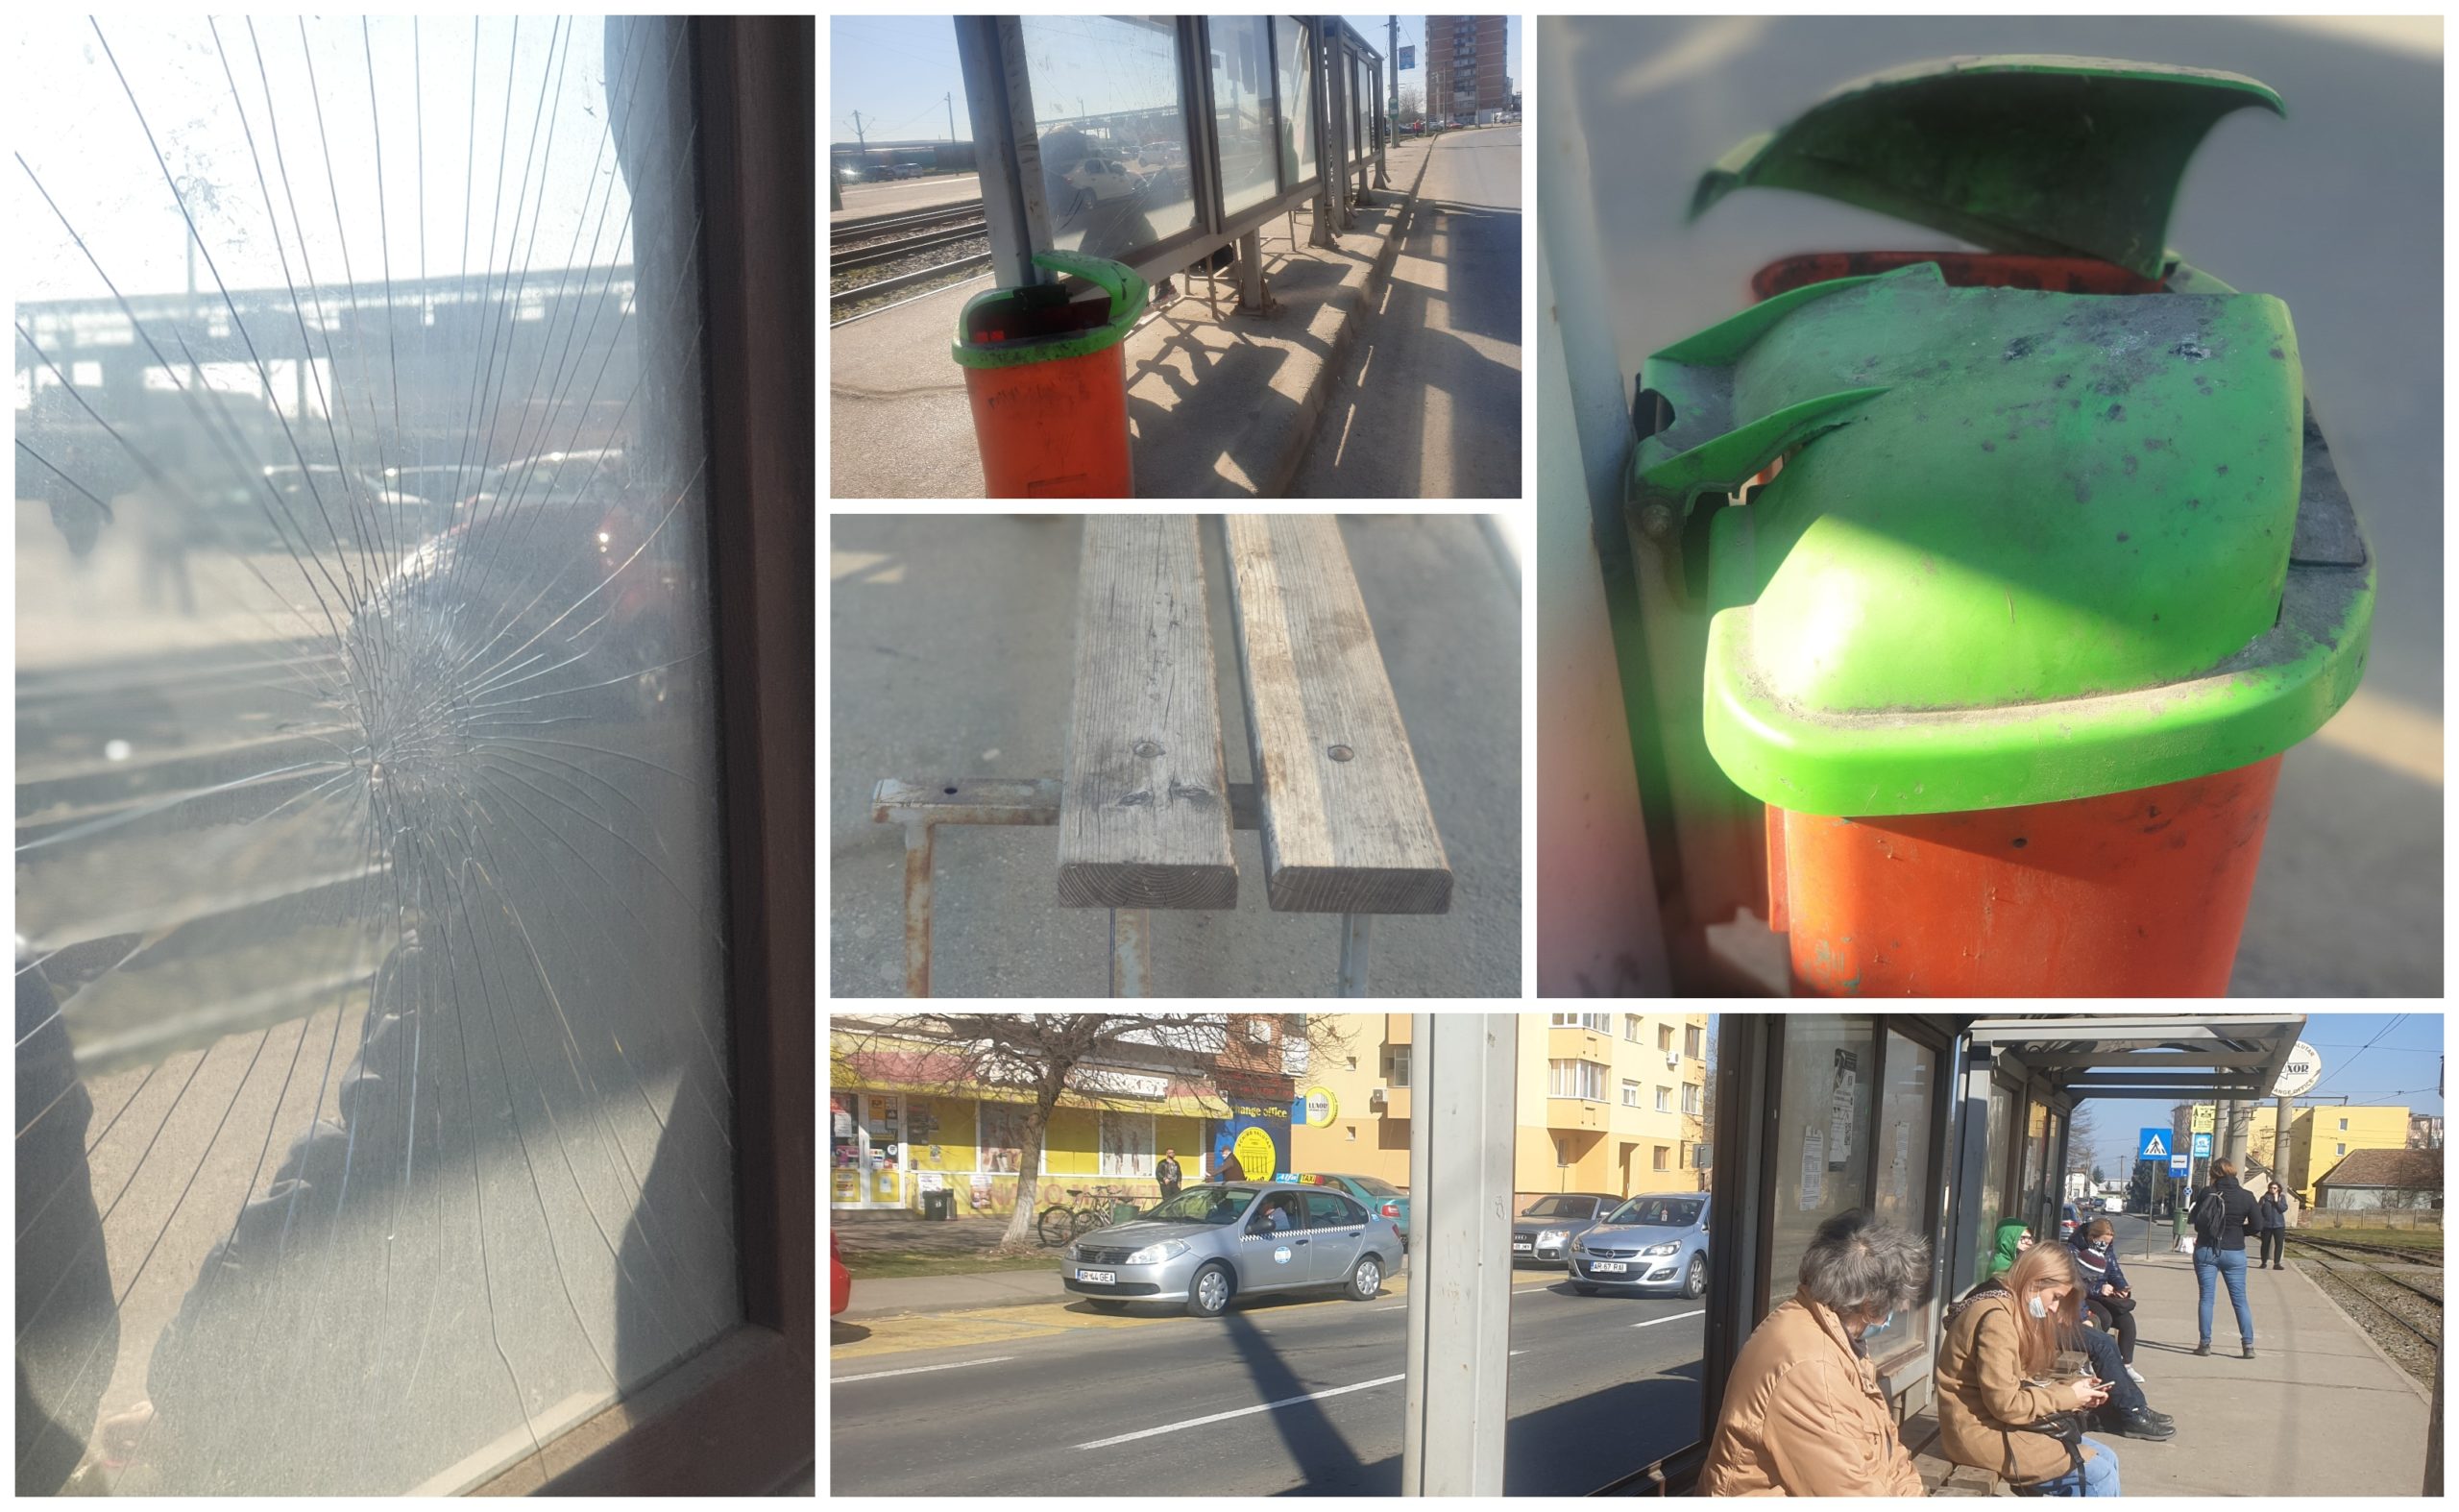 Pickering Thermal punch Vandalism urban în stația de tramvai - ARADON